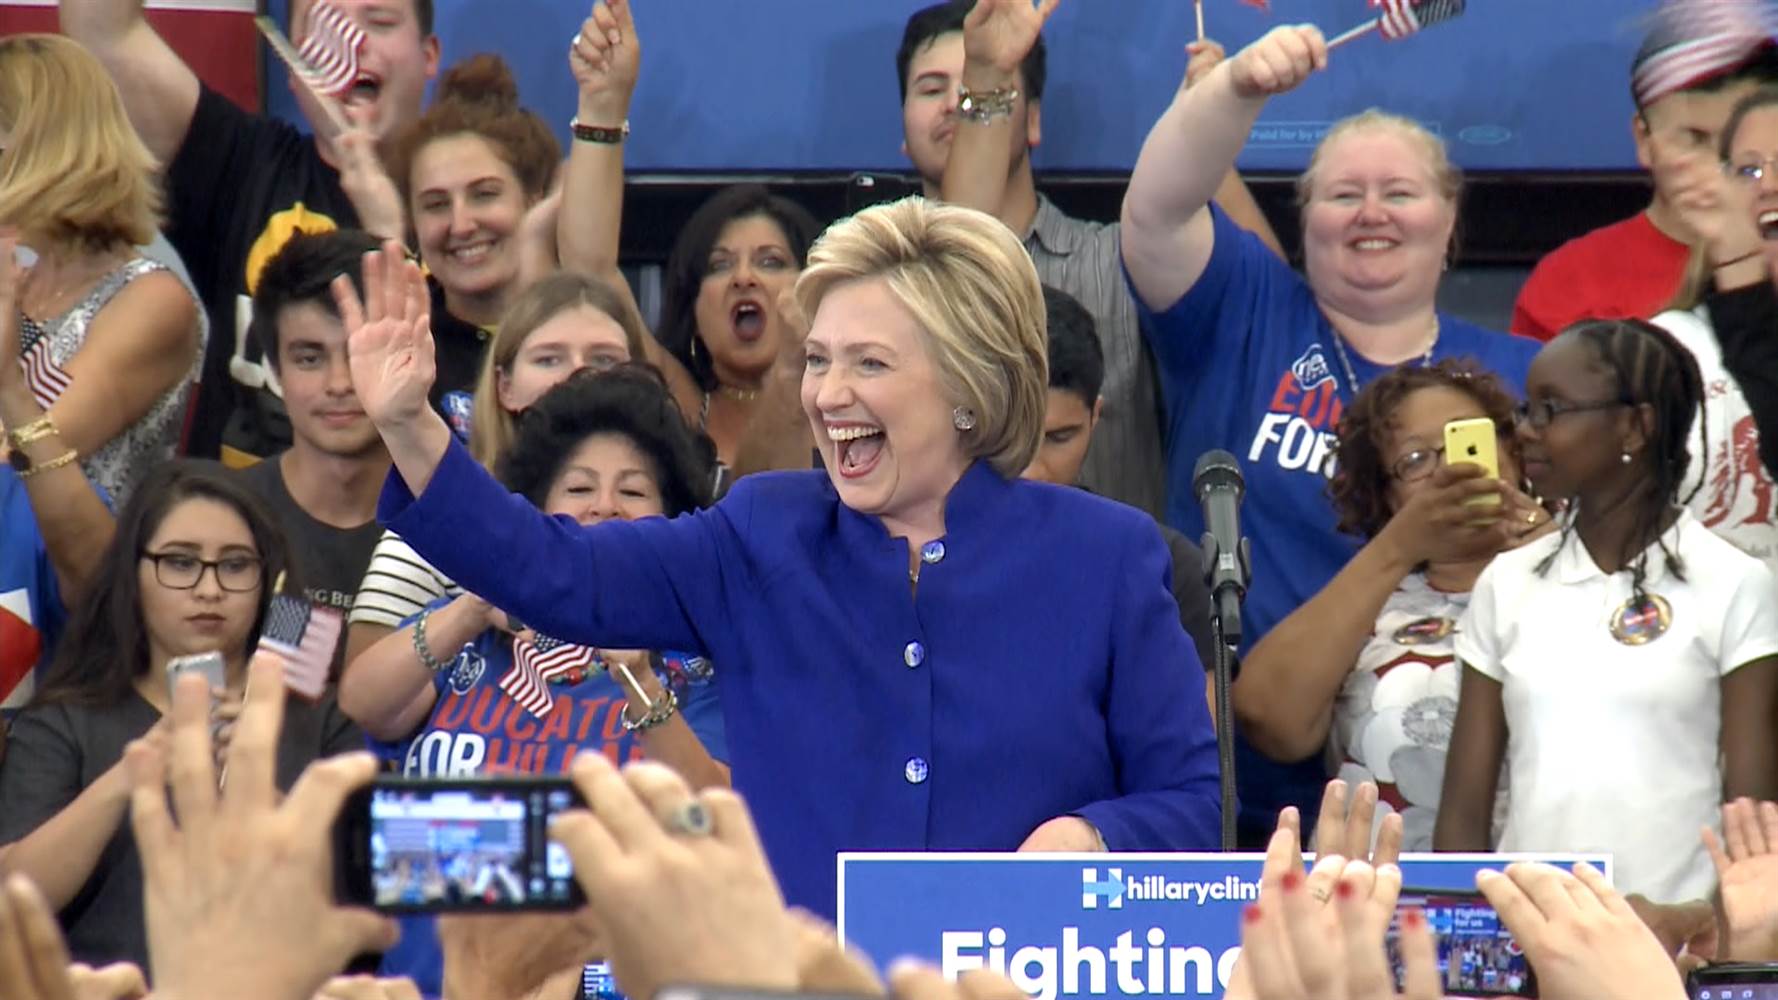 Clinton has clinched Democratic nomination: NBC